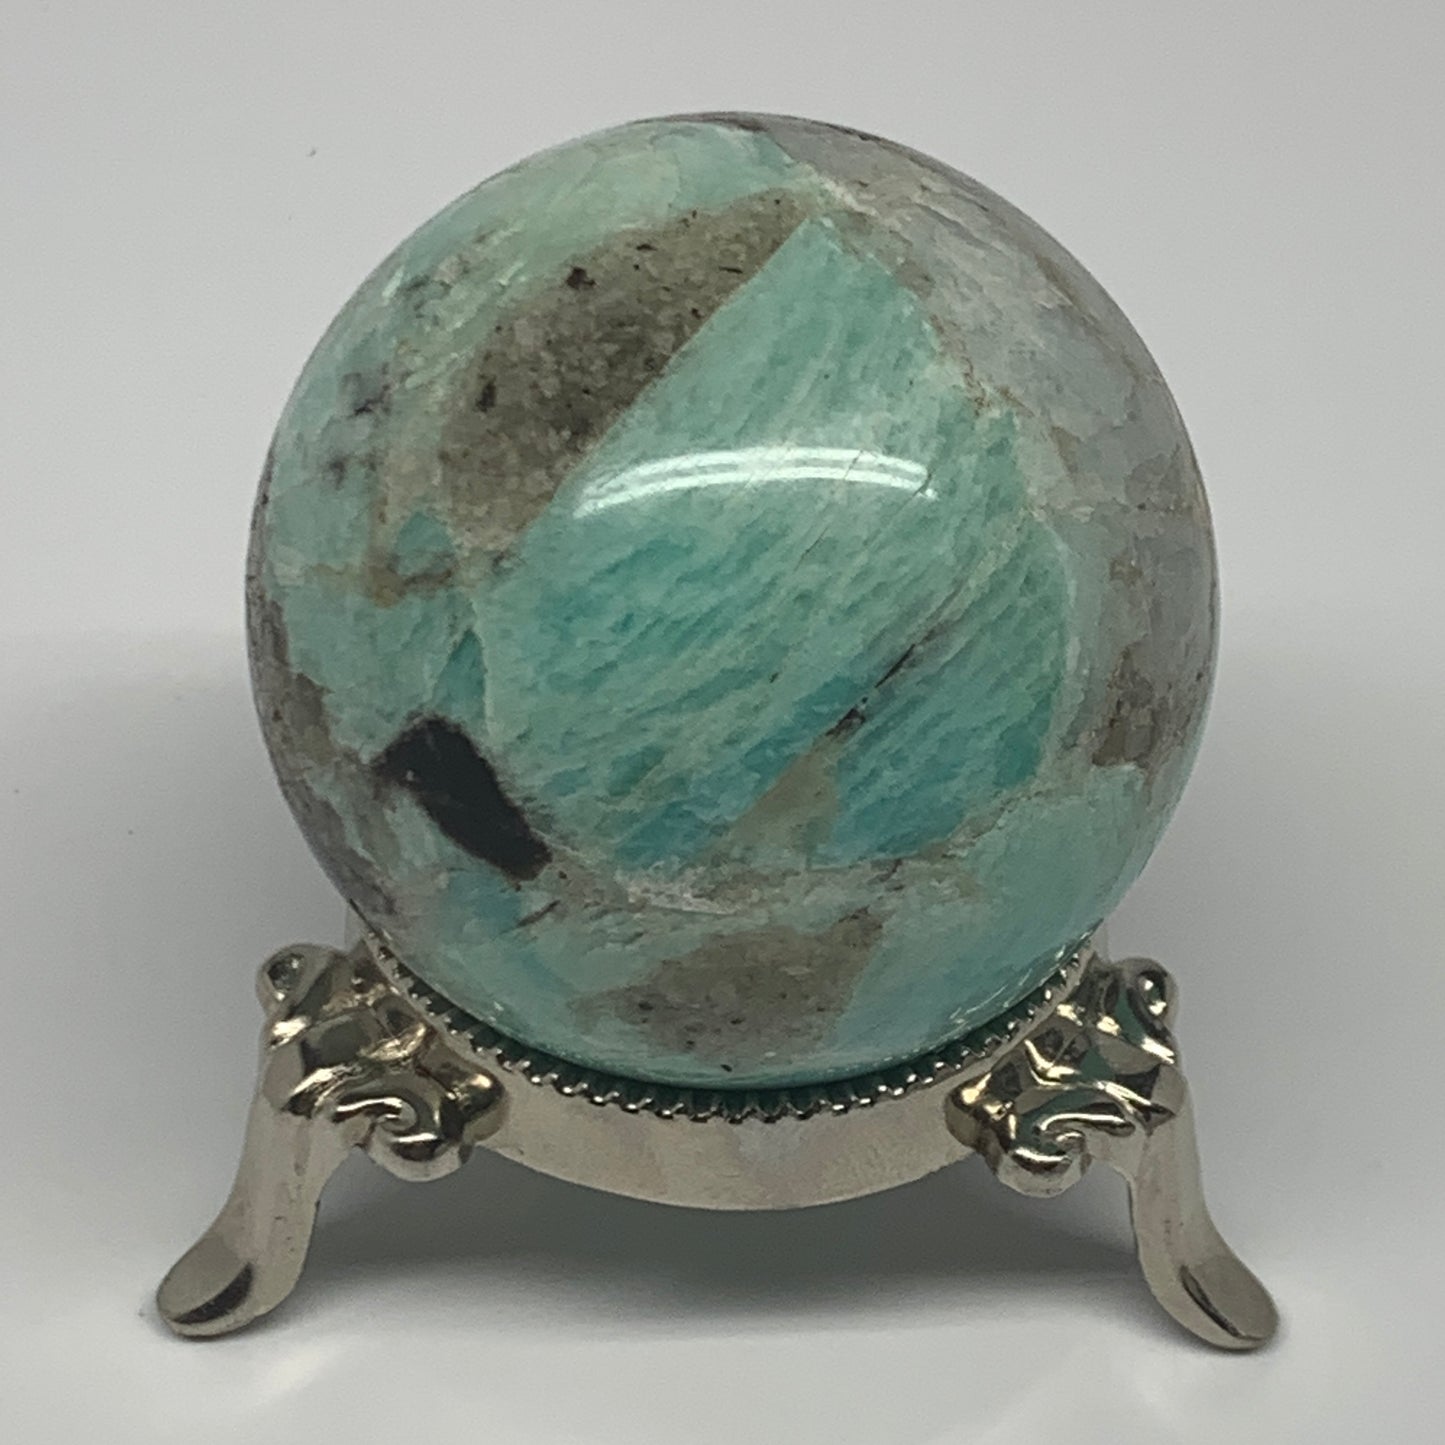 217.3g, 2.1" (54mm), Amazonite Sphere Ball Gemstone from Madagascar, B15782